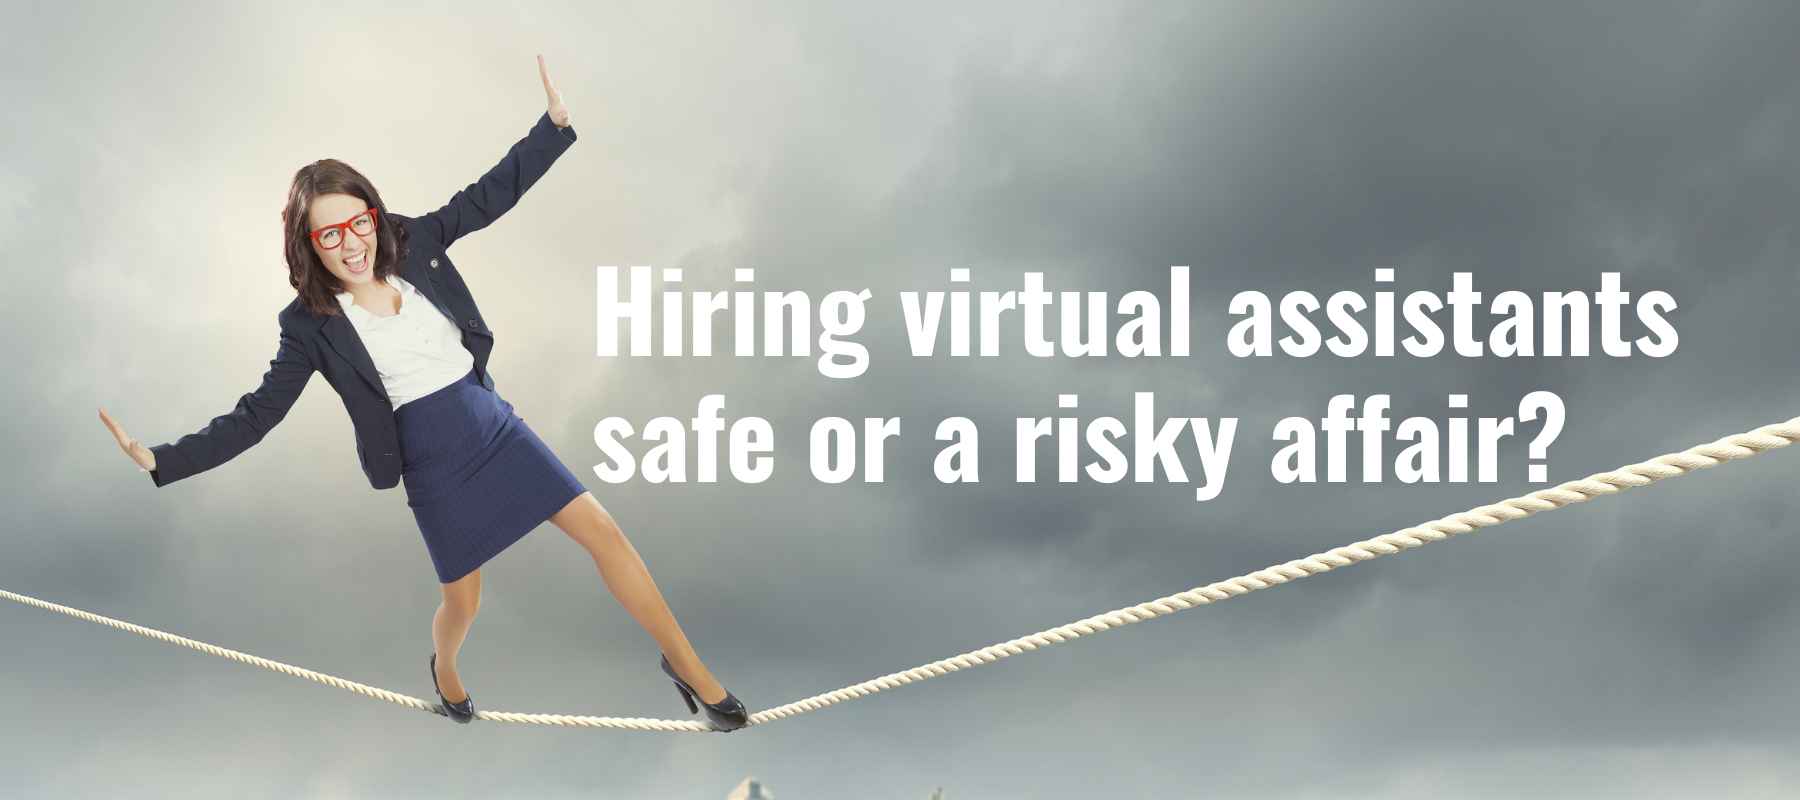 hiring virtual assistants safe or a risky affair